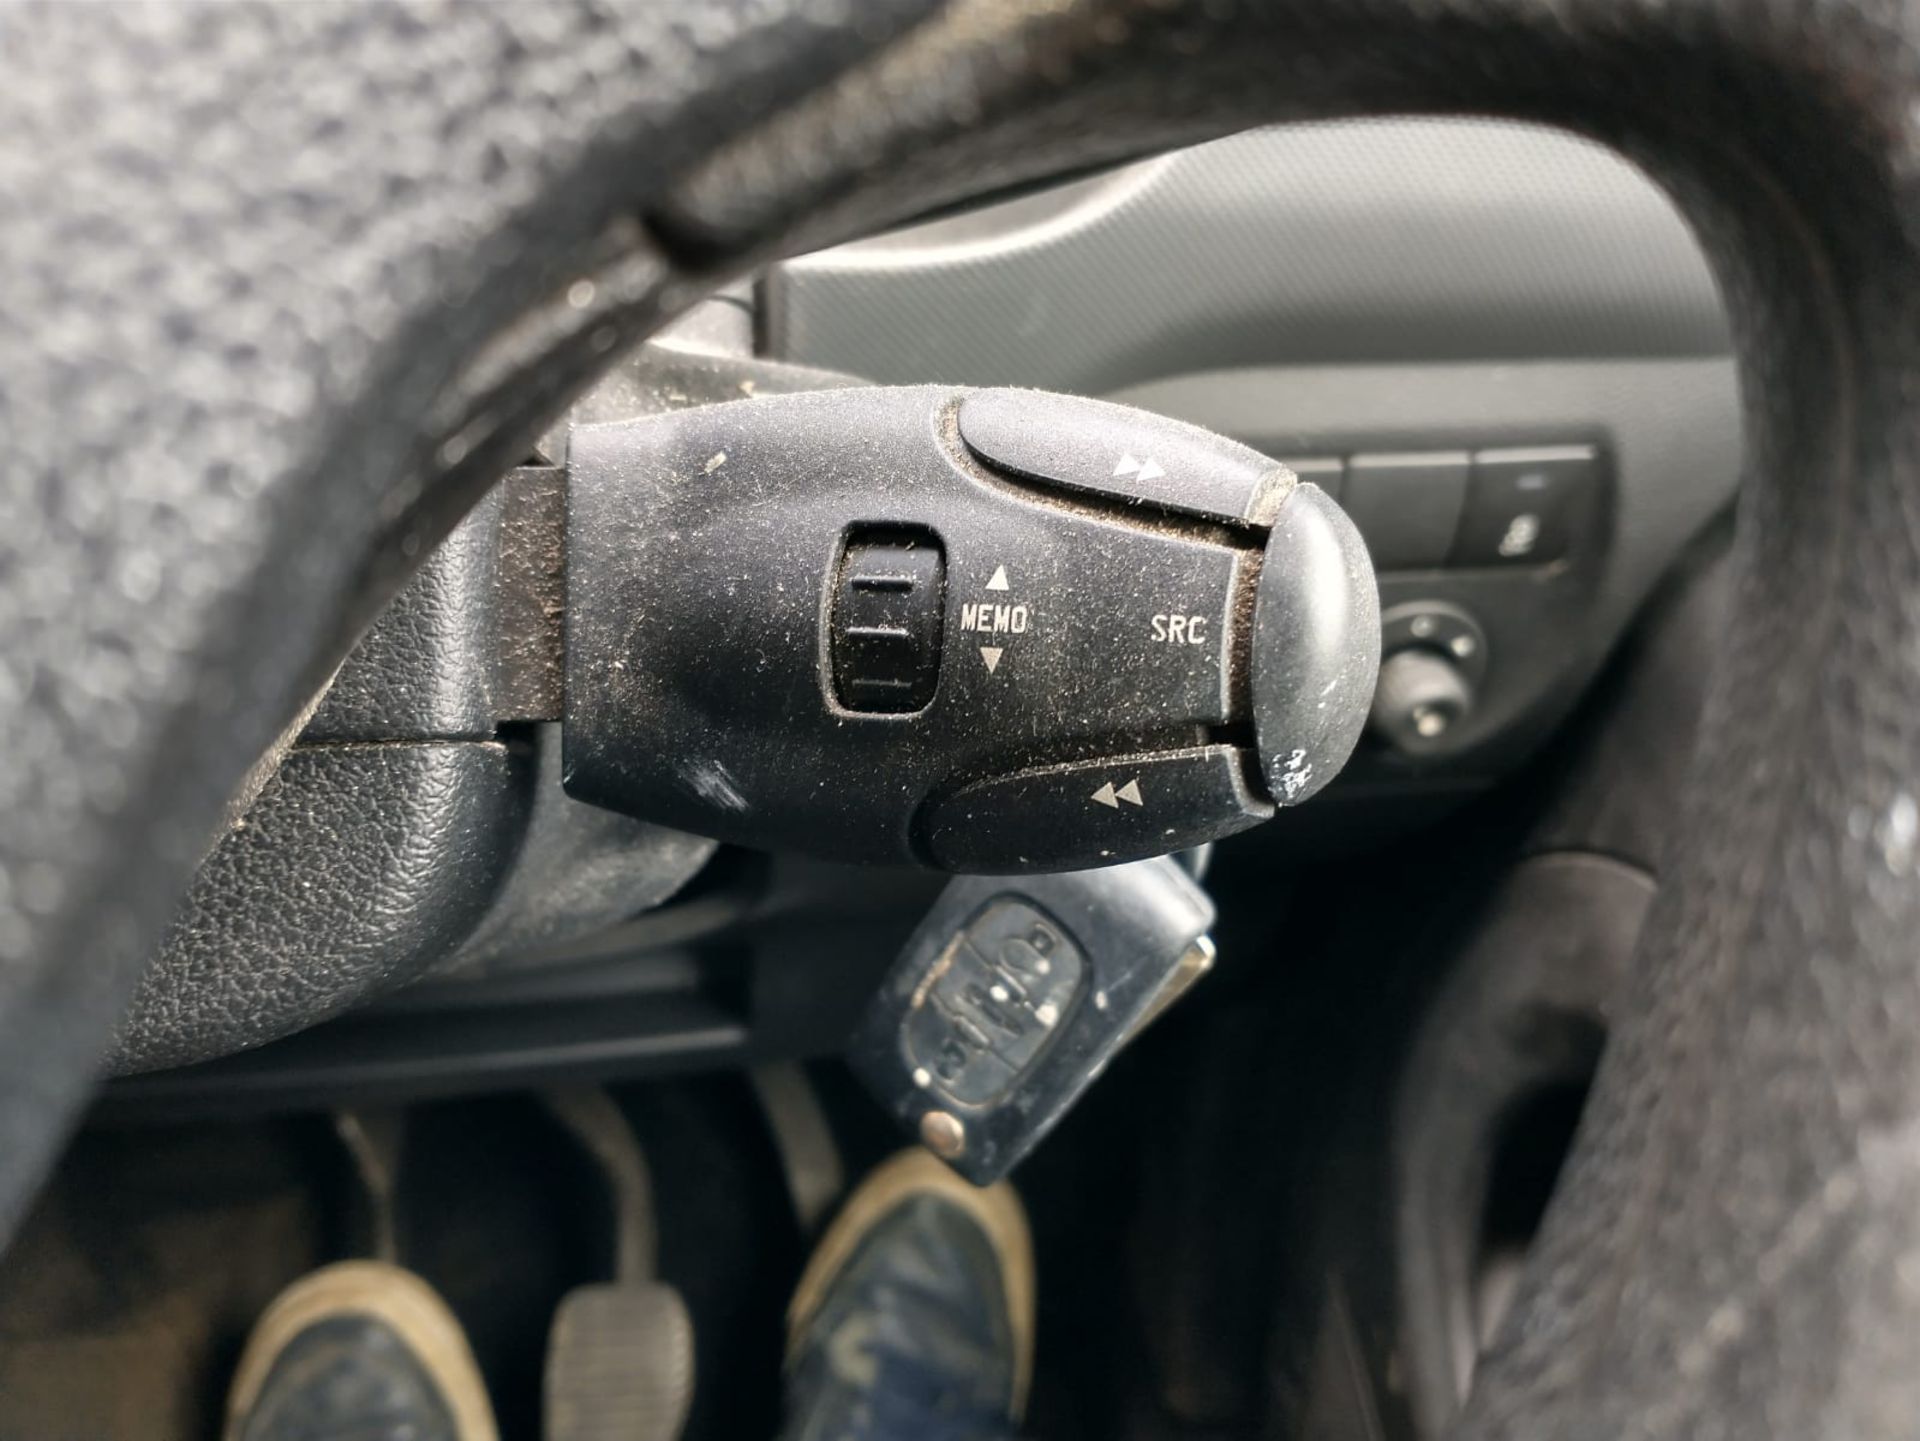 2015 Peugeot Partner Panel Van - CL505 - Location: Corby - Image 3 of 15